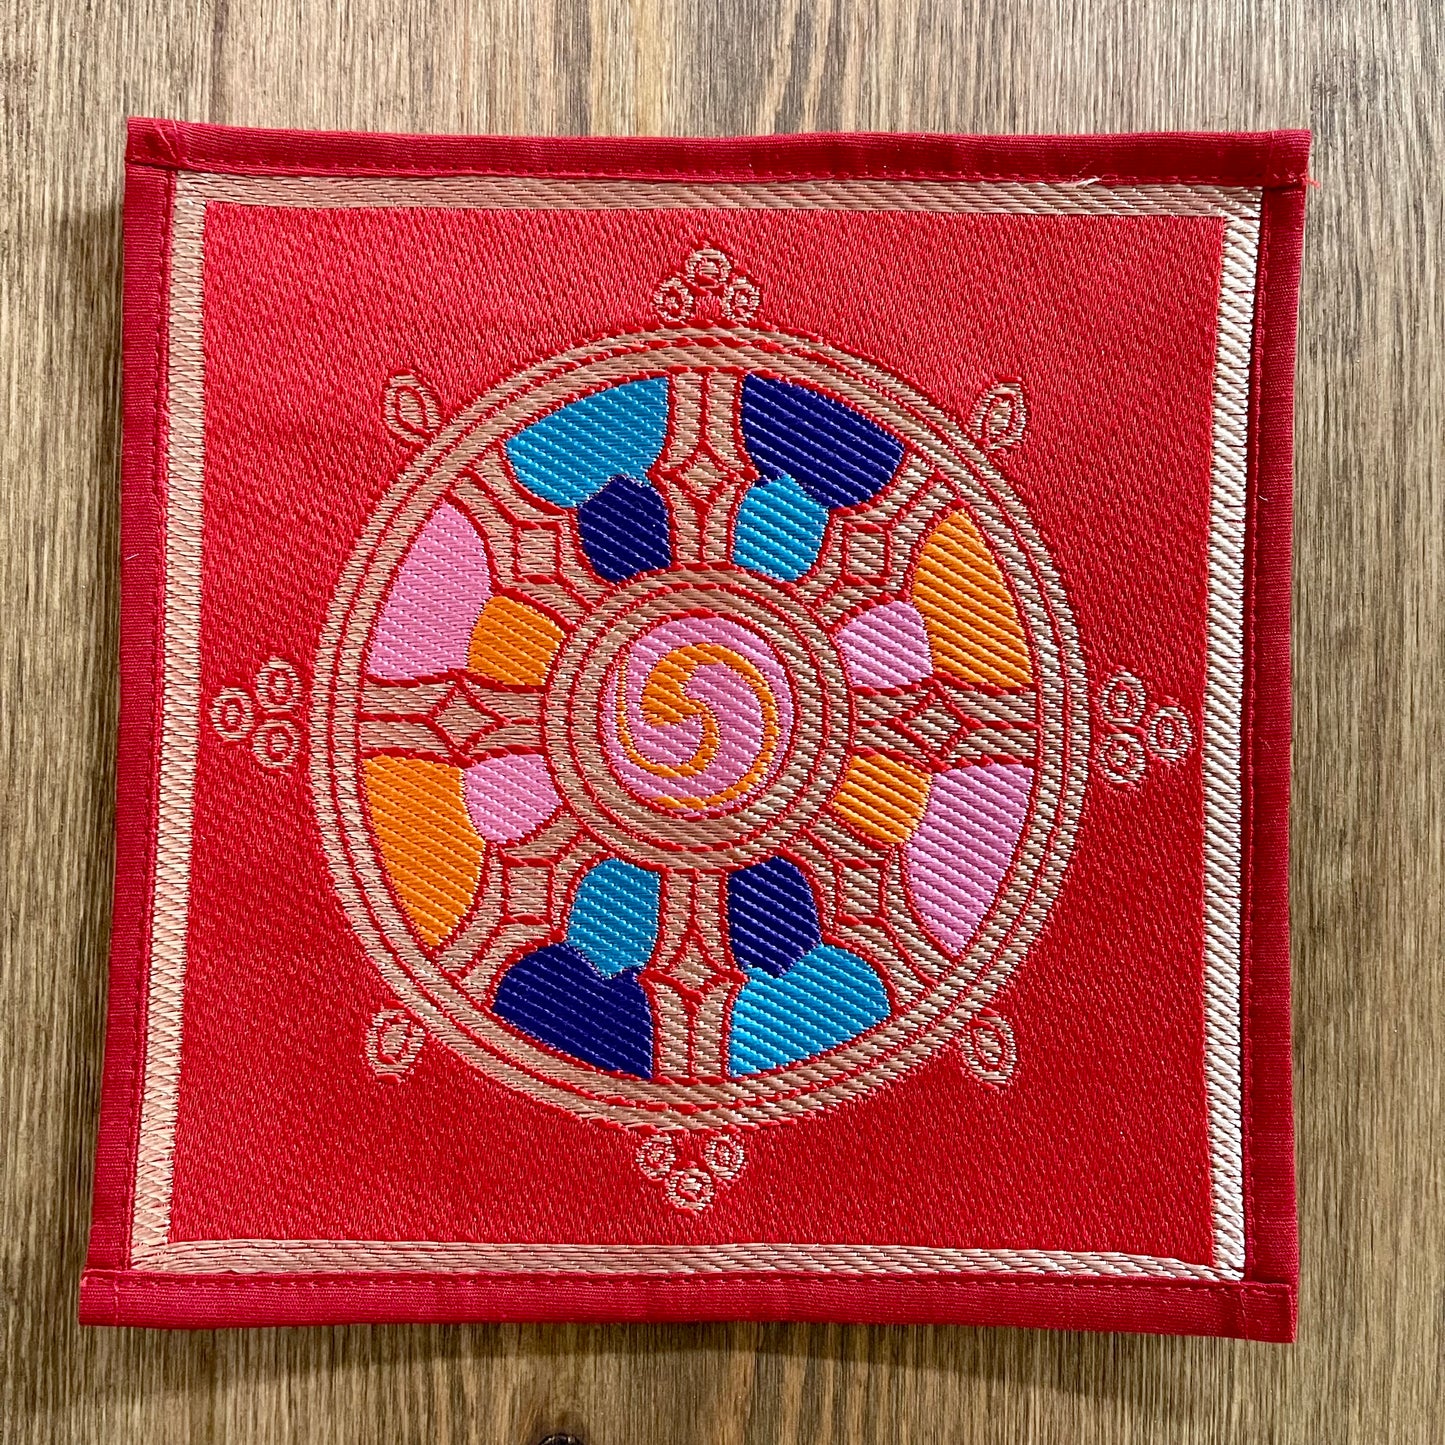 Mini Brocade Cloth alter cloth Dorje Mat 17 X 17 cm (Dharma wheel)